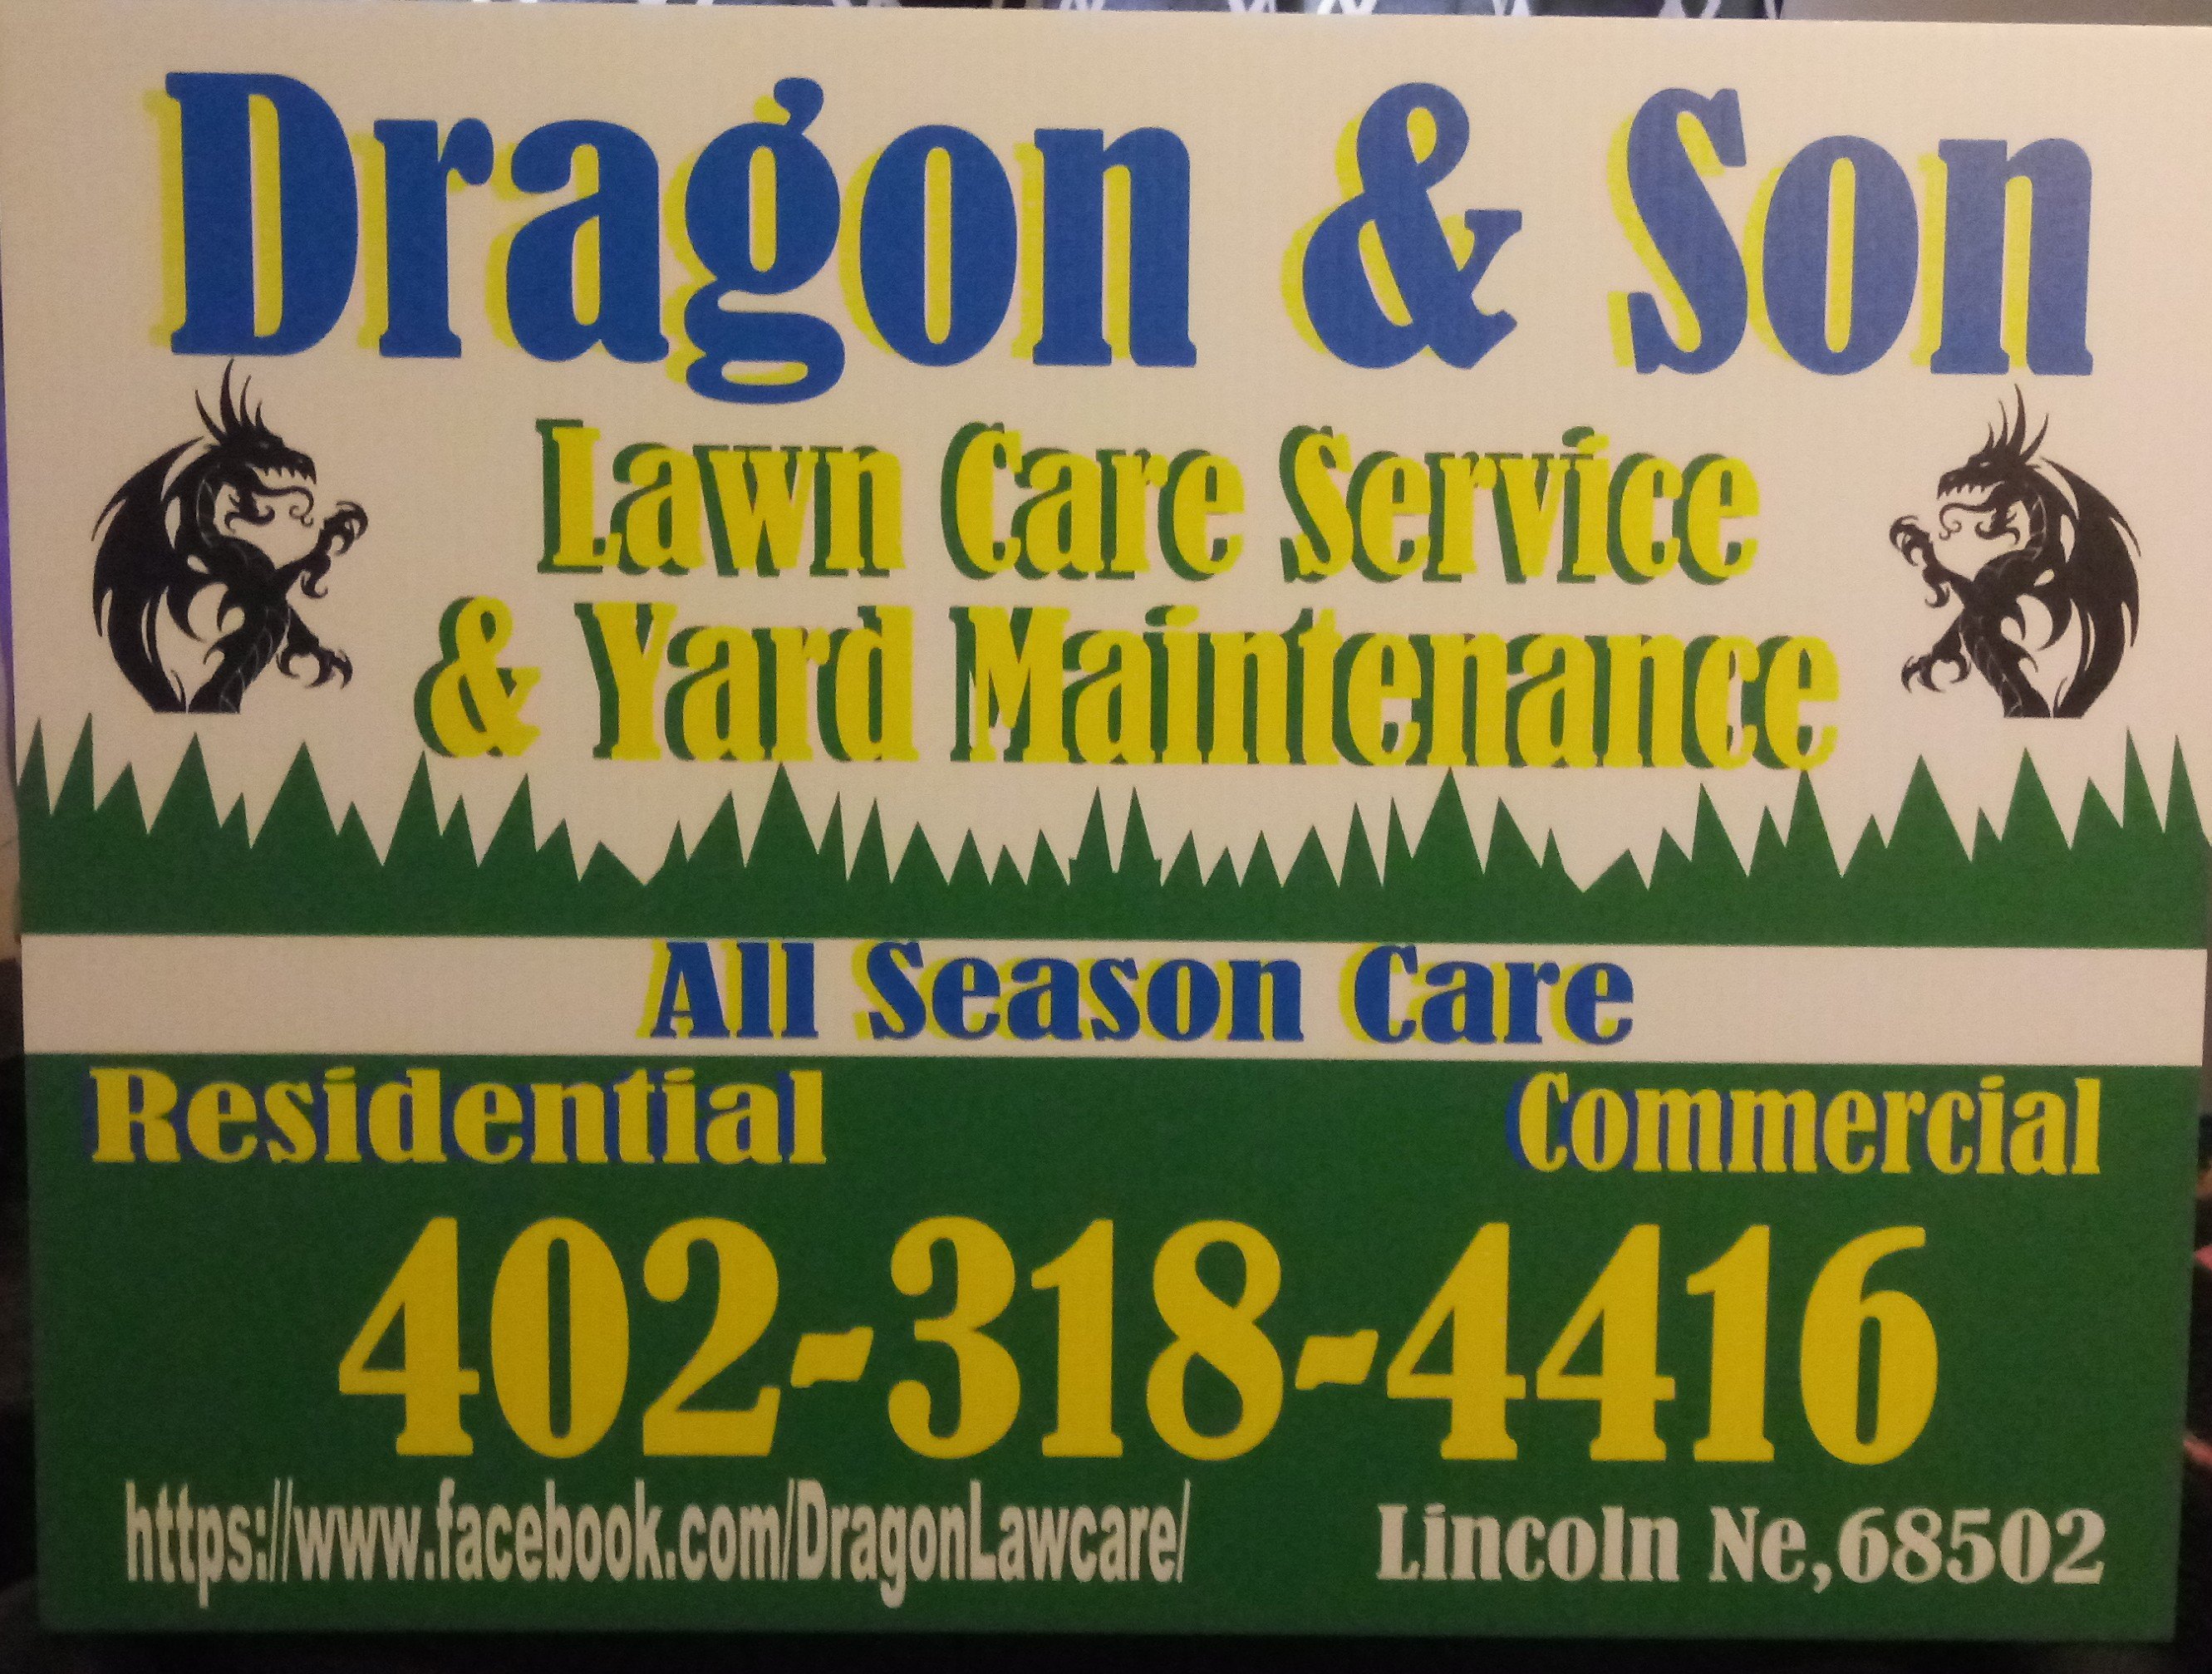 Dragon & Son Lawn Care Service and Yard Maintenance Logo